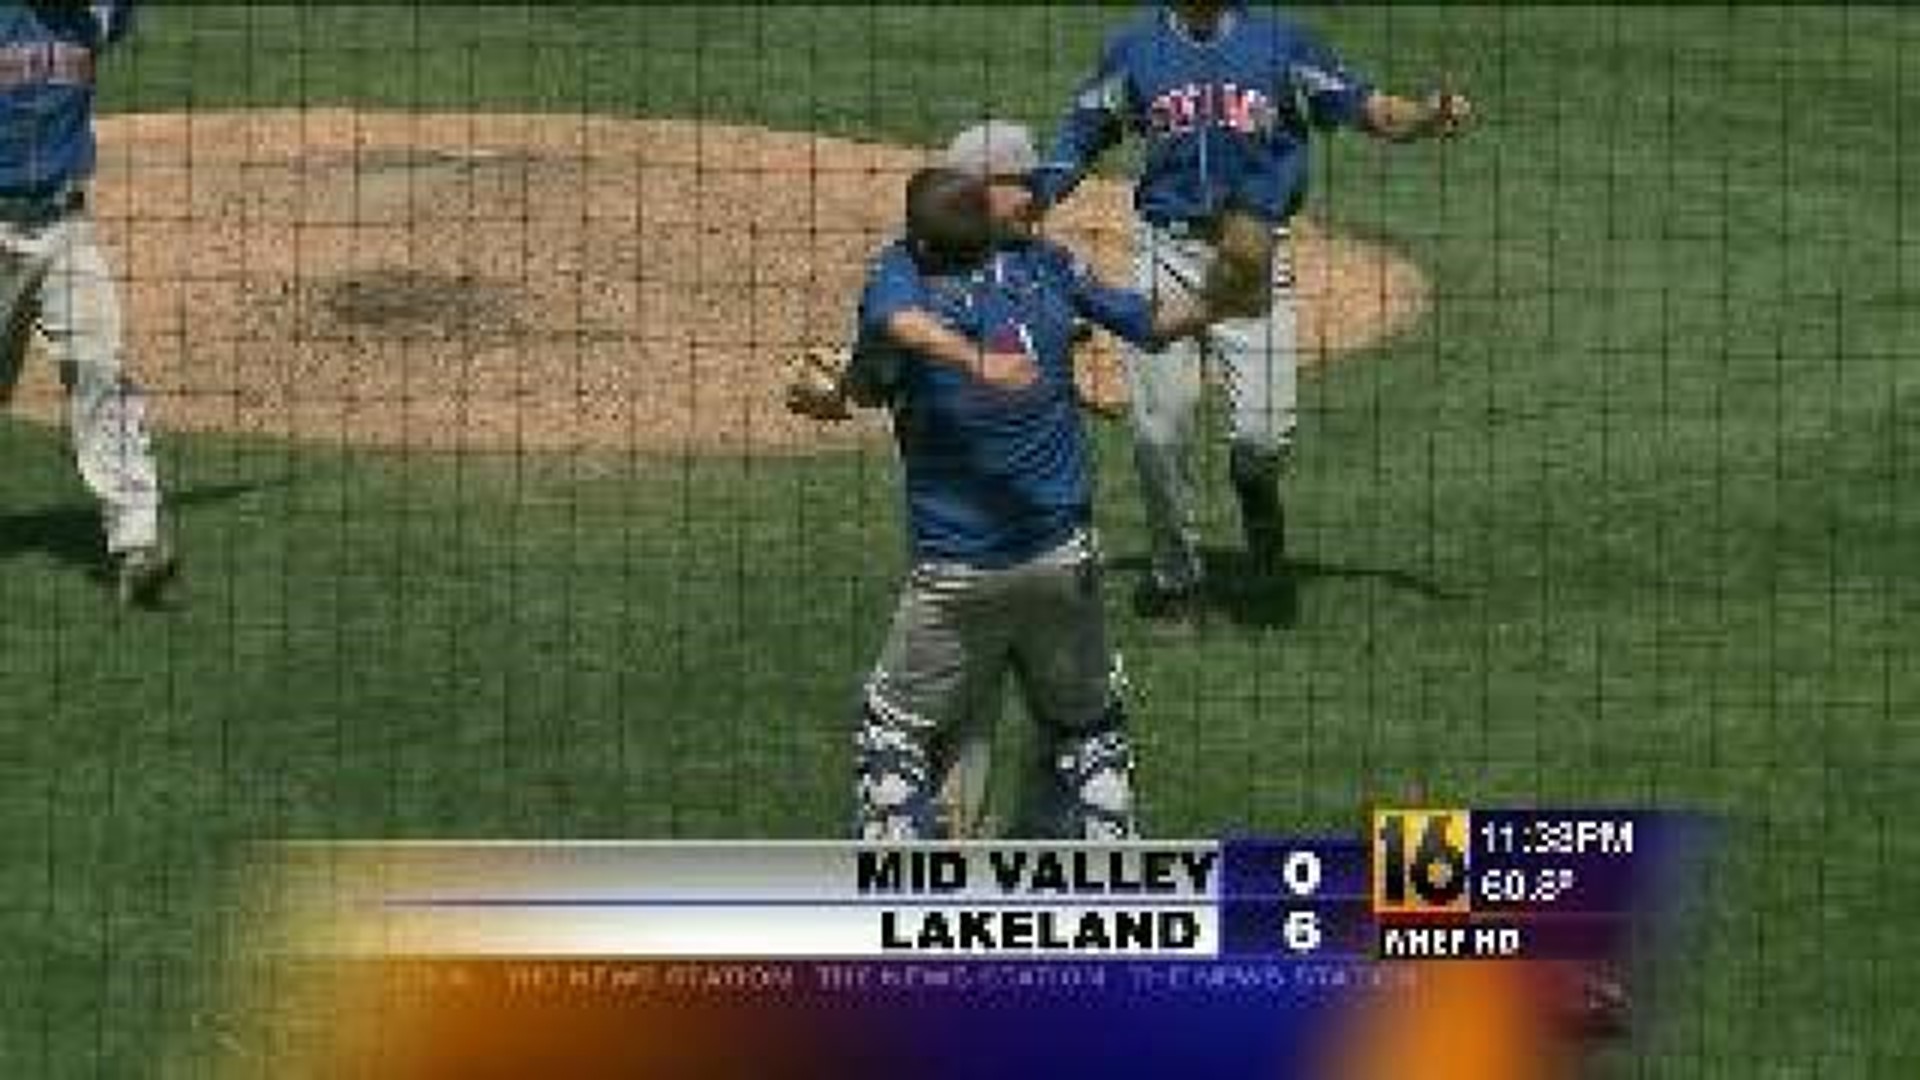 Lakeland vs Mid Valley